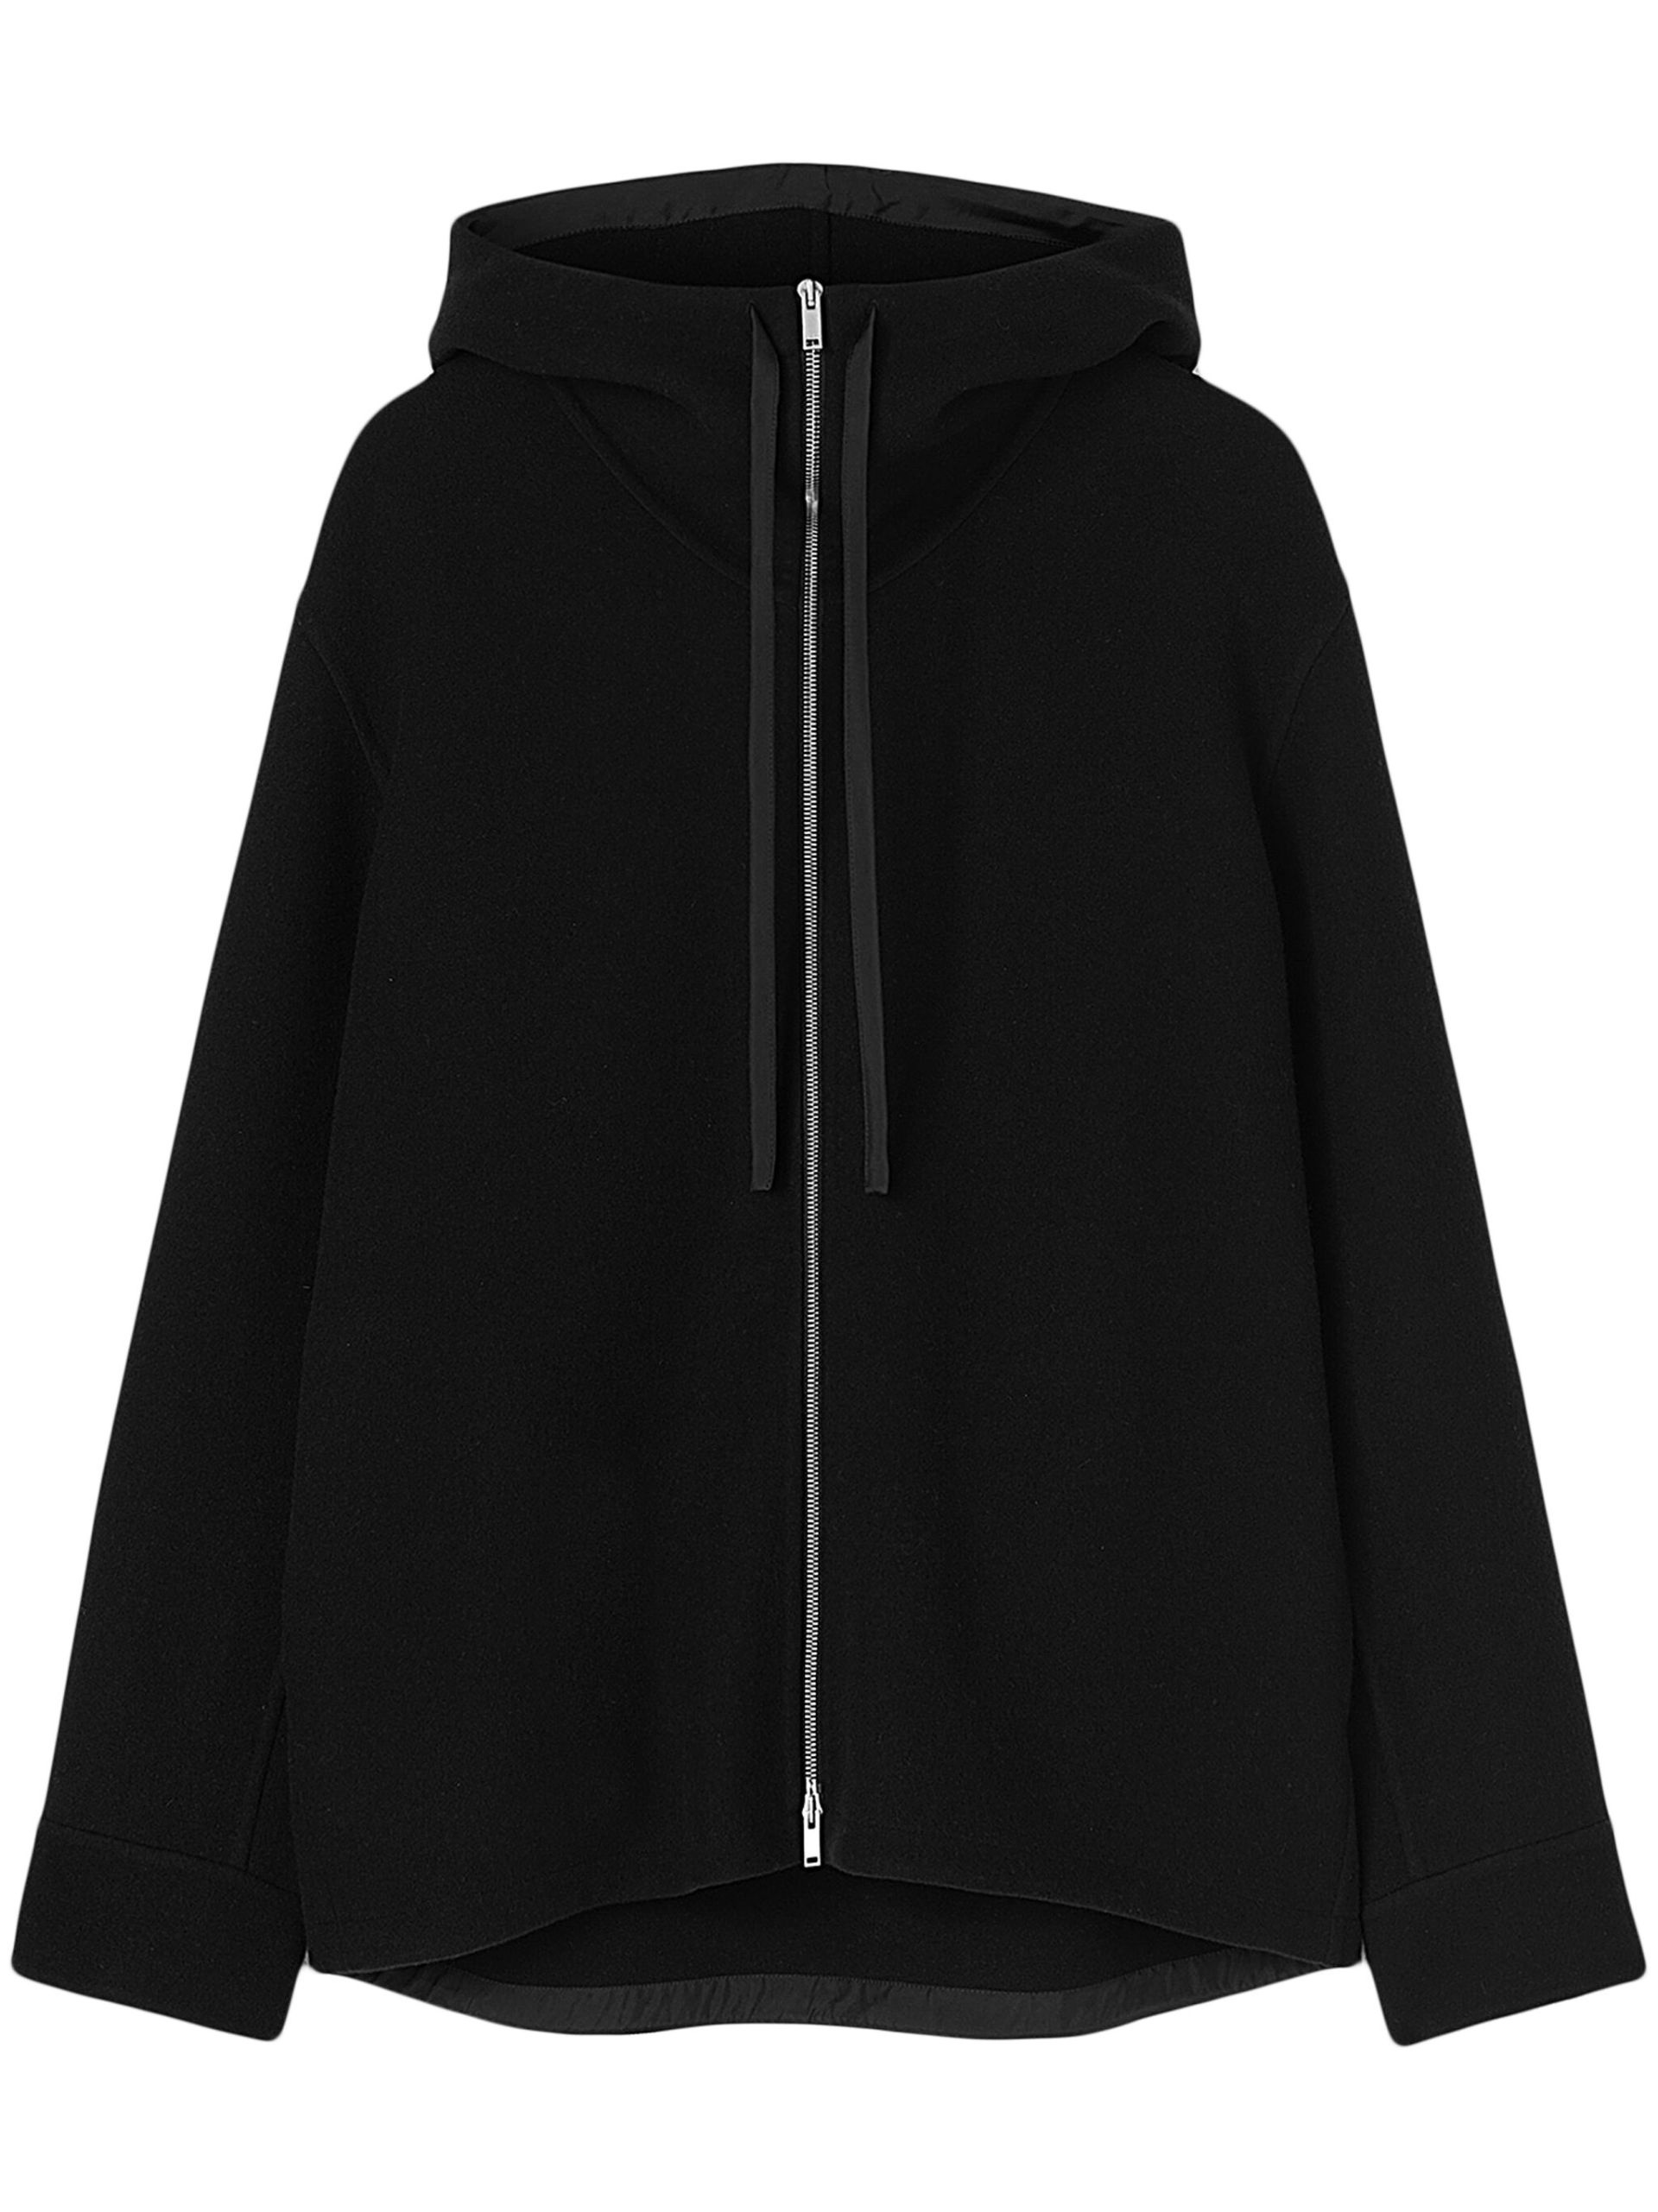 Black Drawstring Hooded Jacket - 1